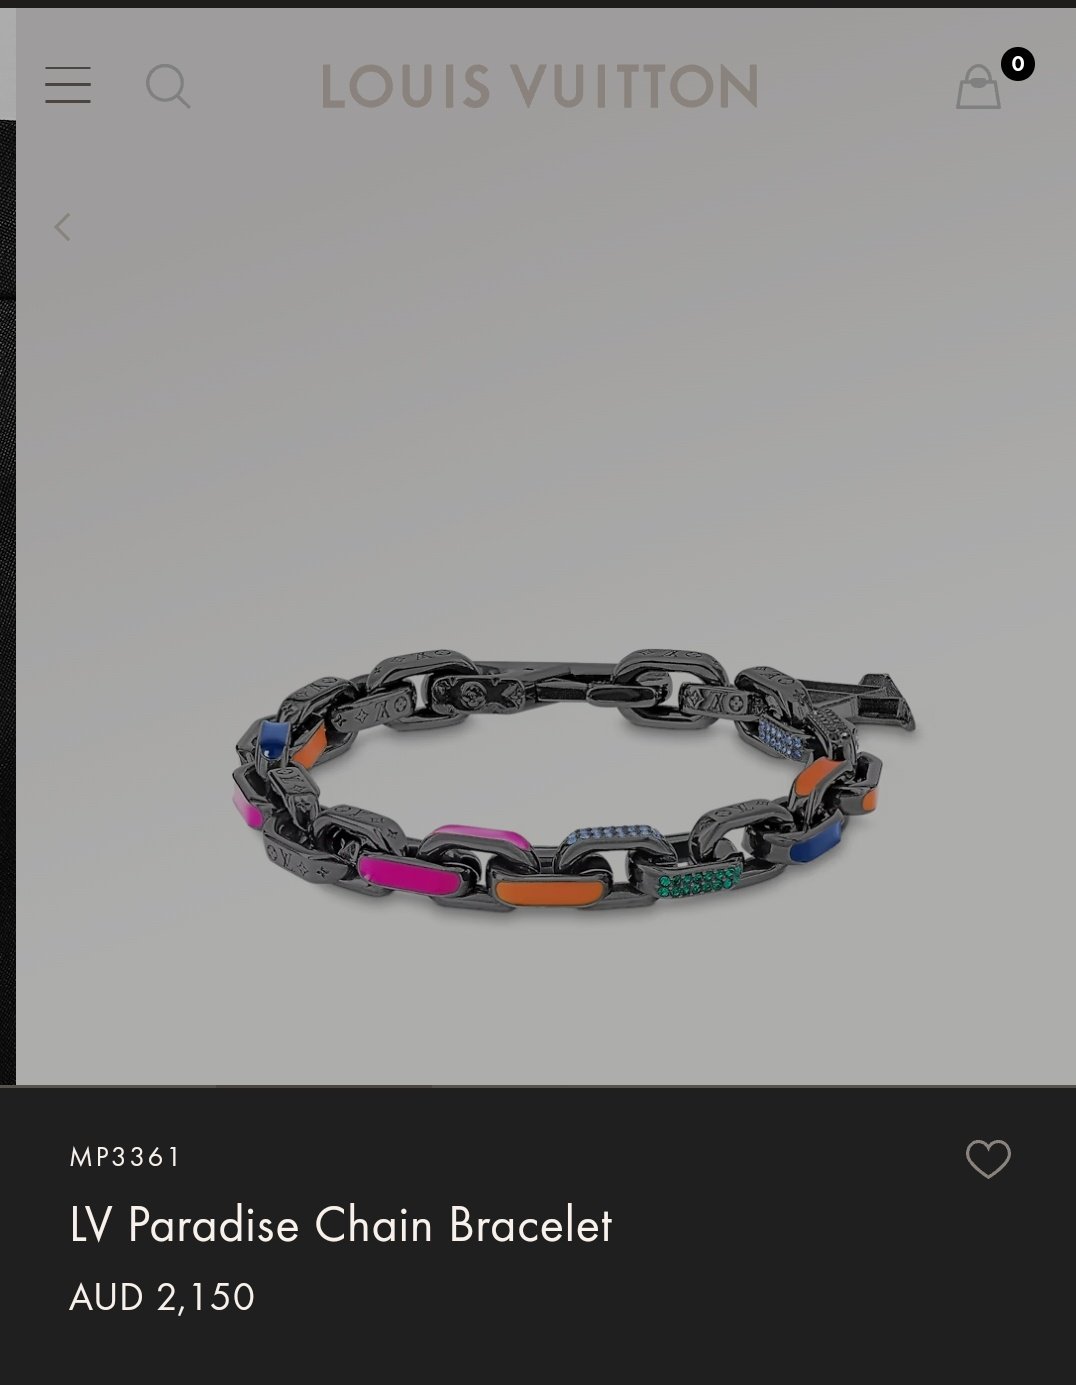 lv paradise chain bracelet